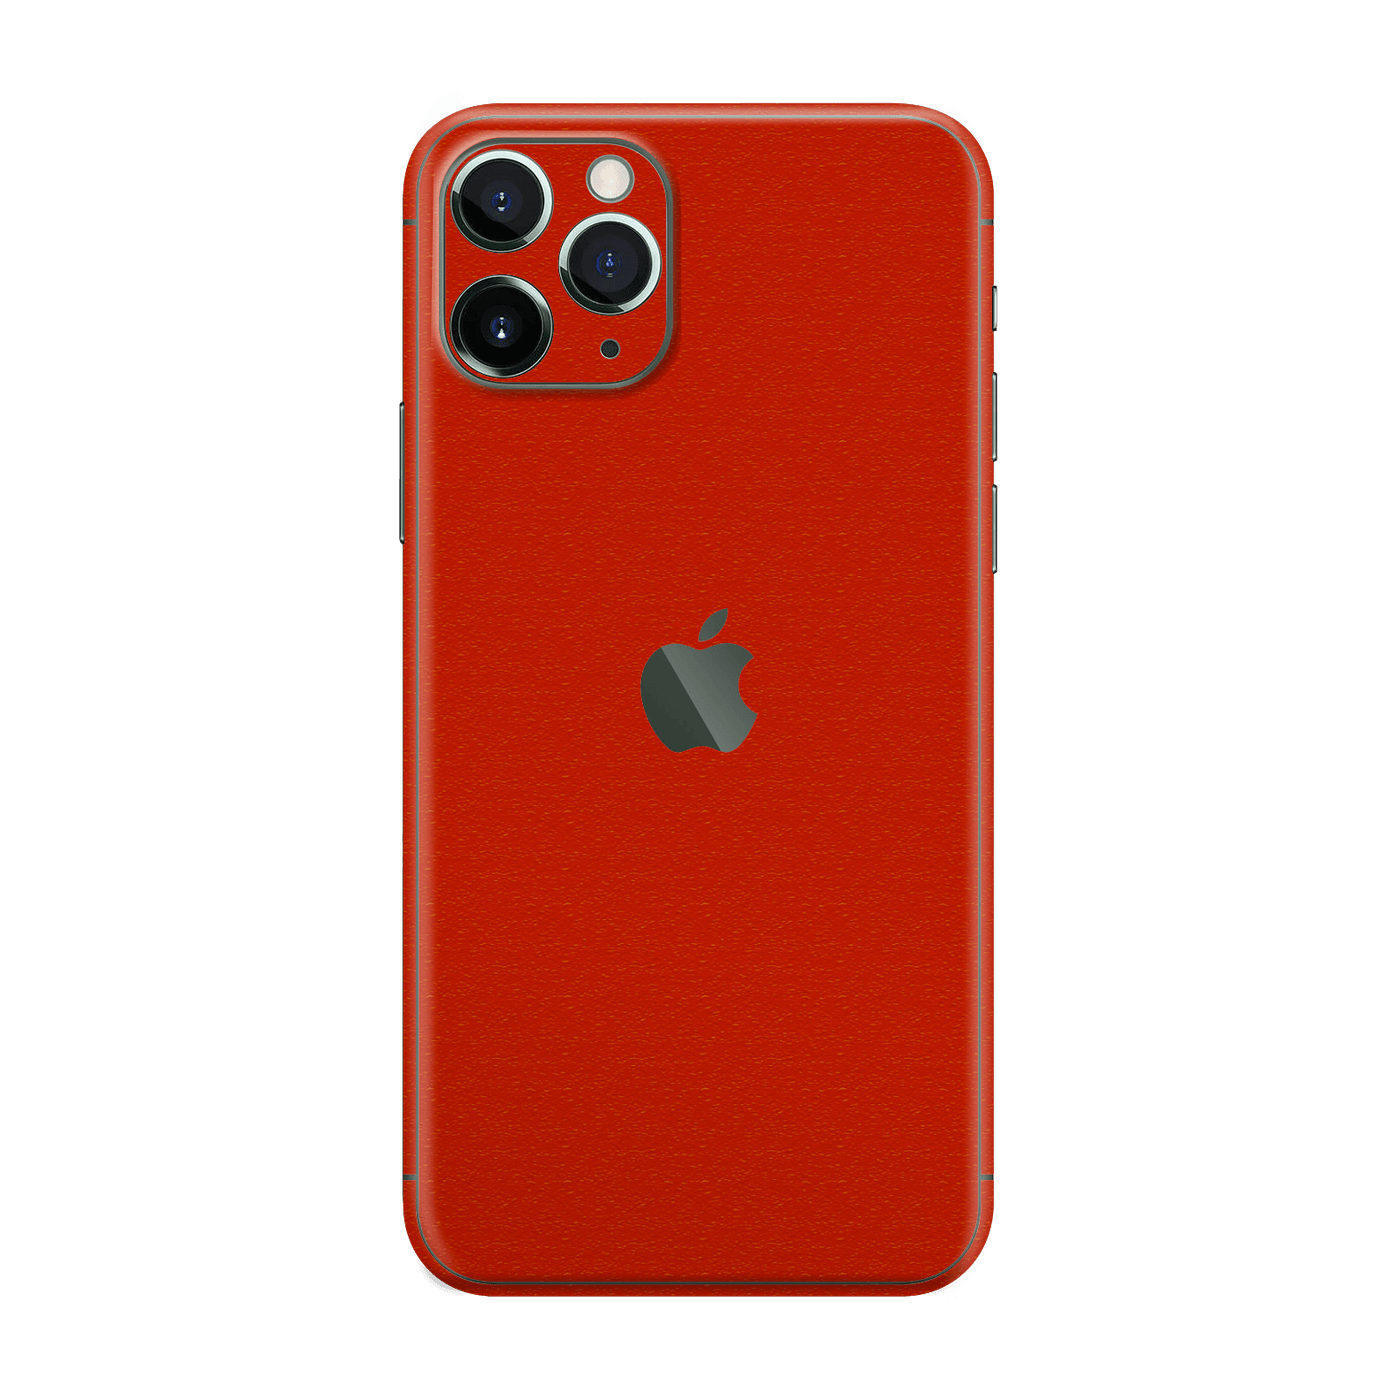 Iphone 11 Pro Max Red Cherry Juice Skin Wrap Easyskinz